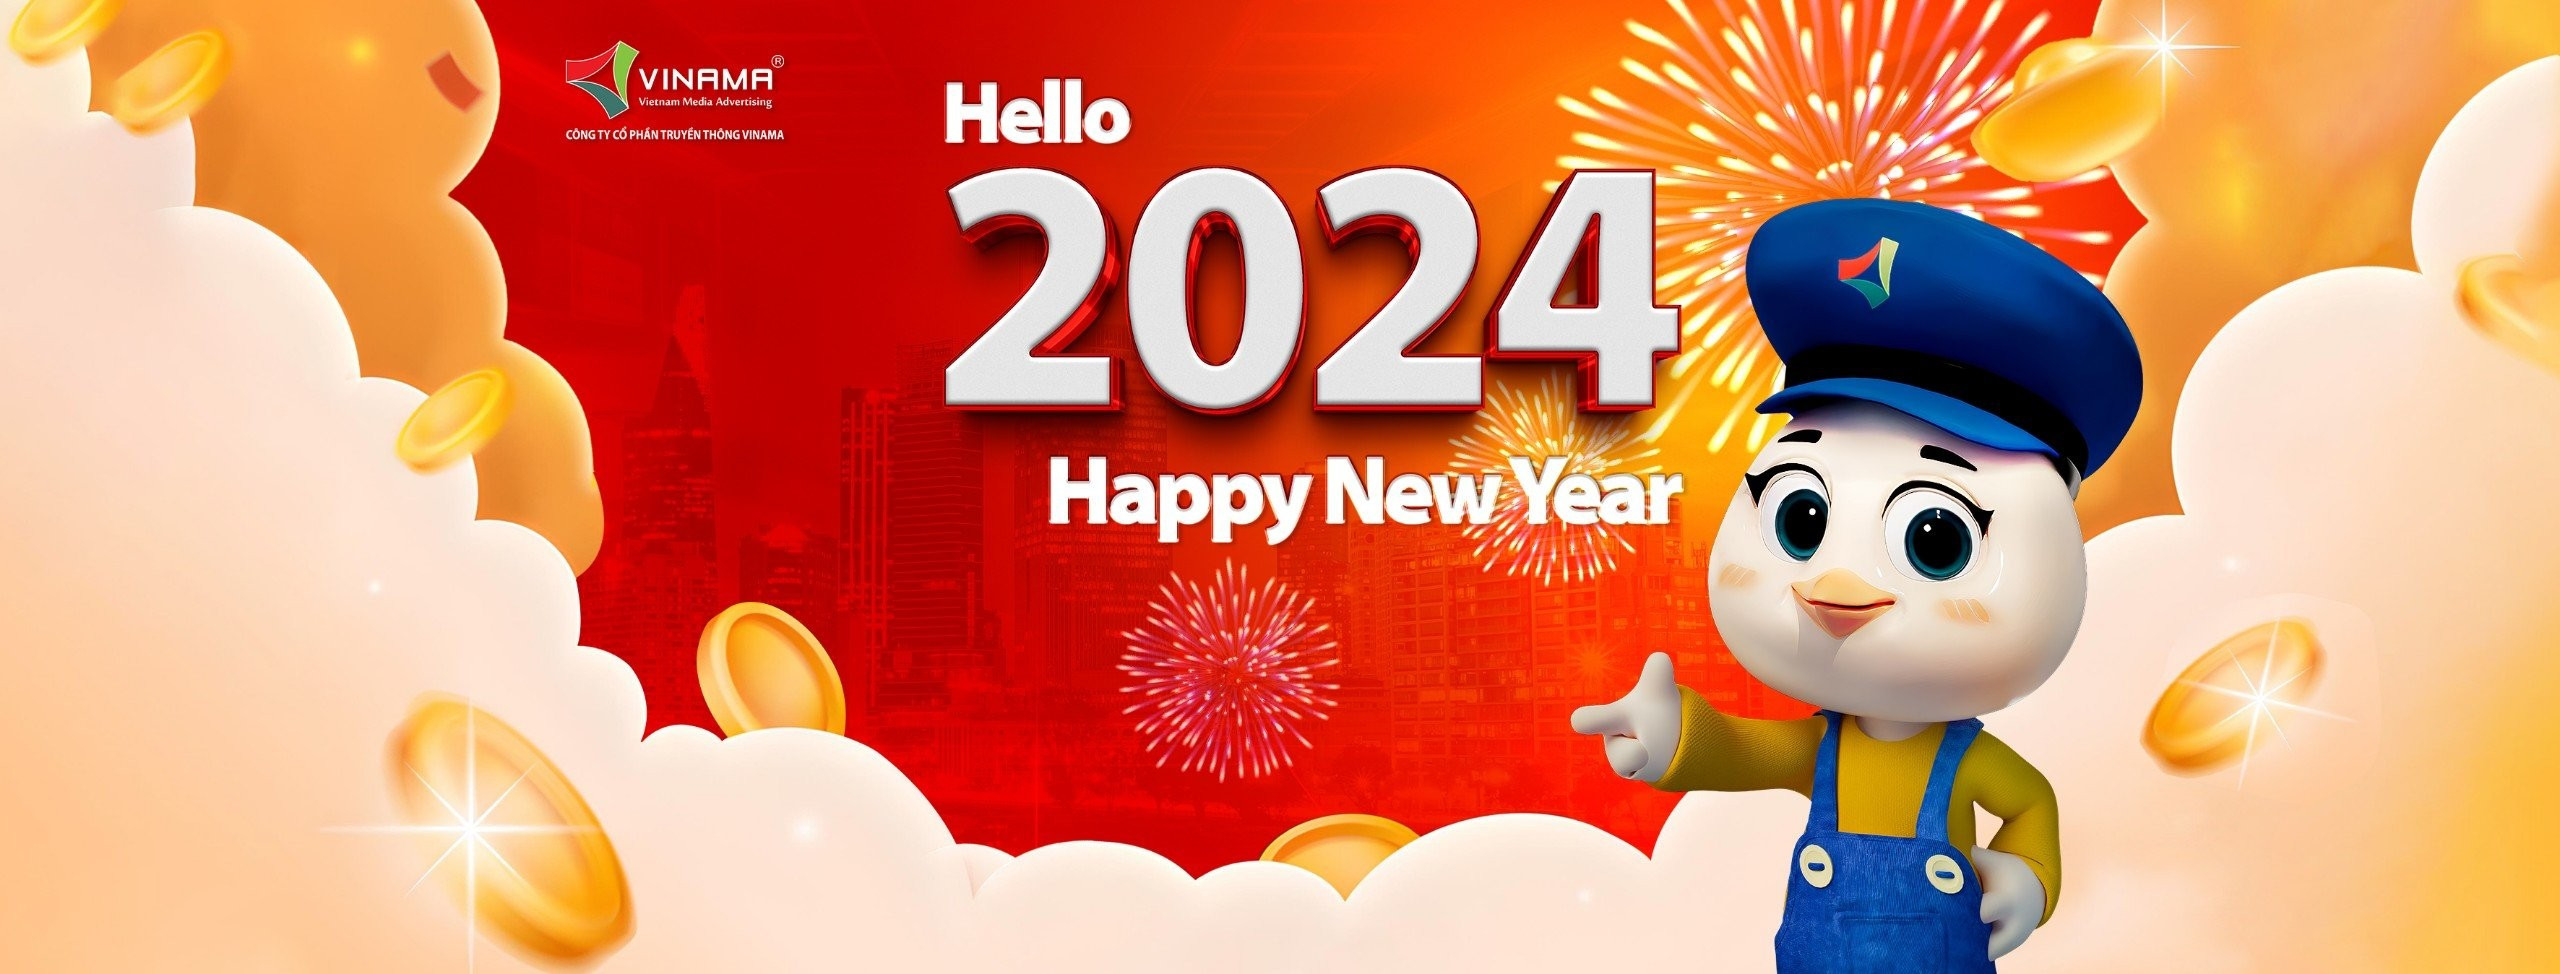 Happy new year 2024